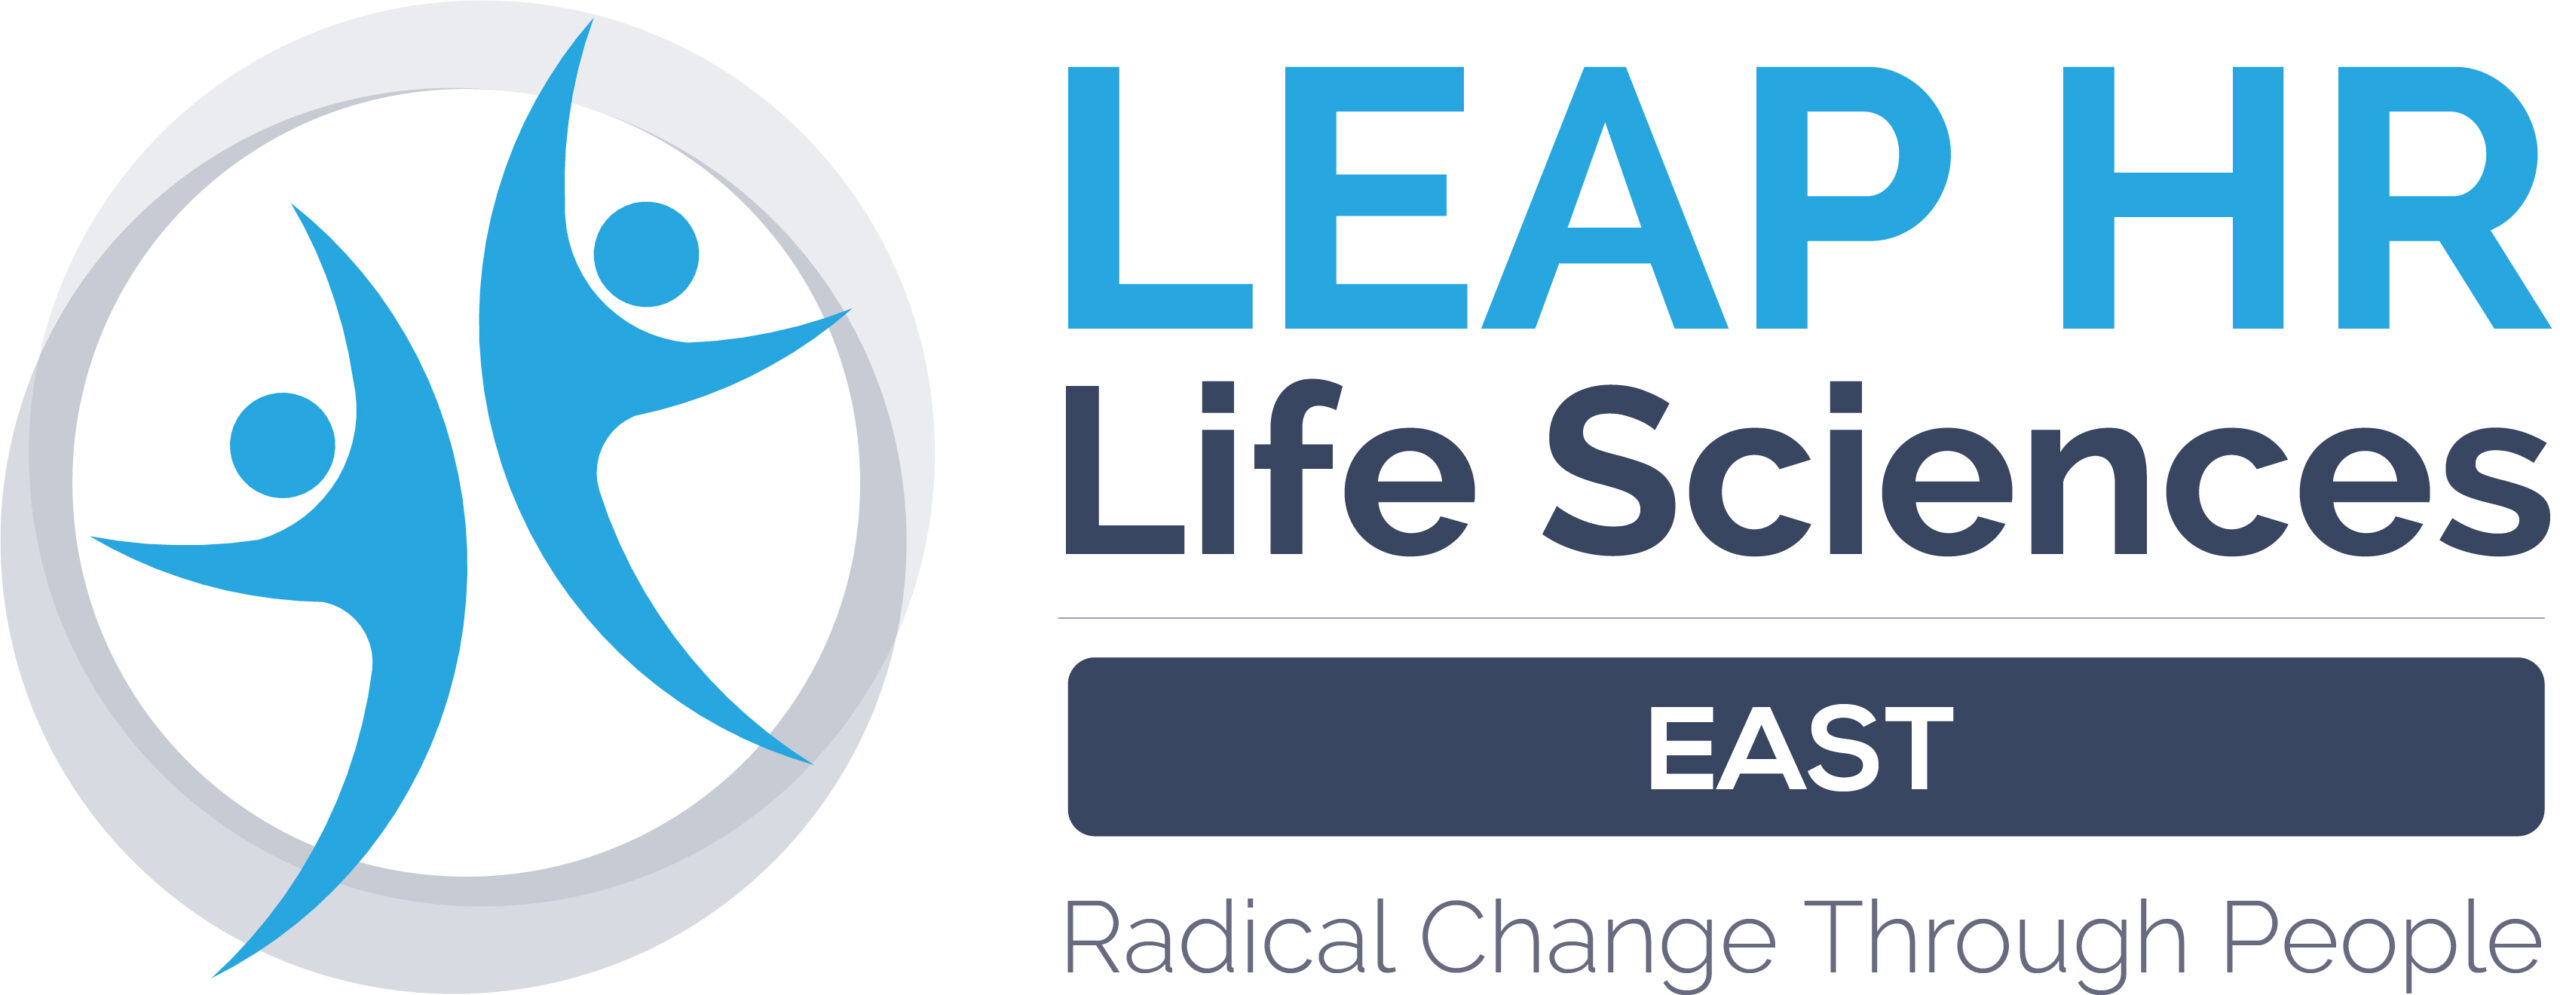 HW211019 LEAP Life Sciences East Logo FINAL